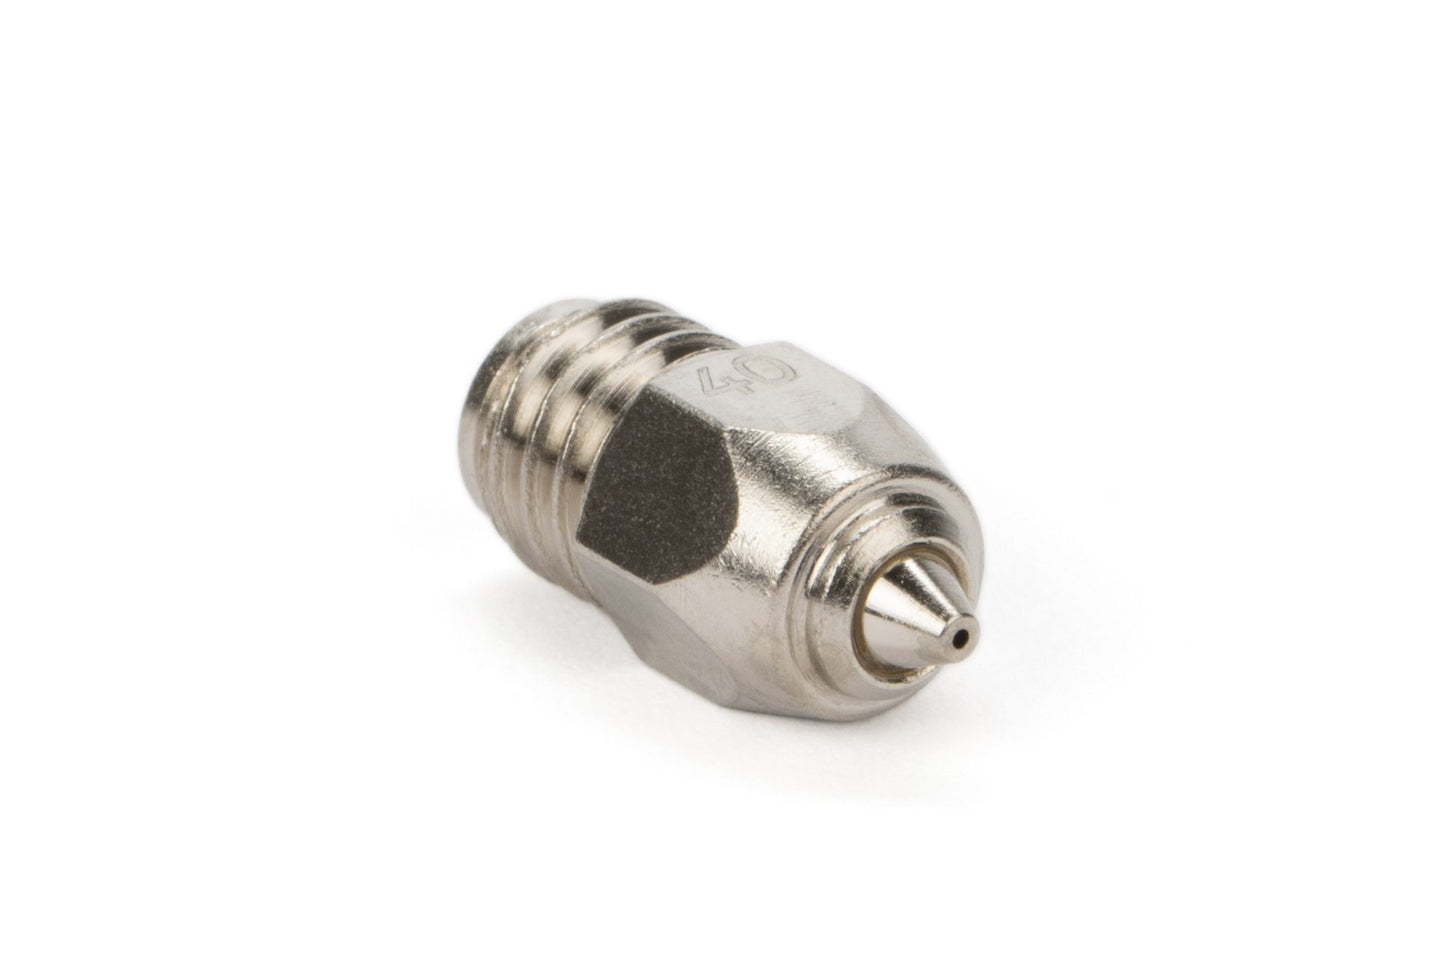 Bondtech CHT BiMetal RepRap Coated Nozzle (MK8 Hotend) - 1.75mm/2.85mm Filament - All Sizes